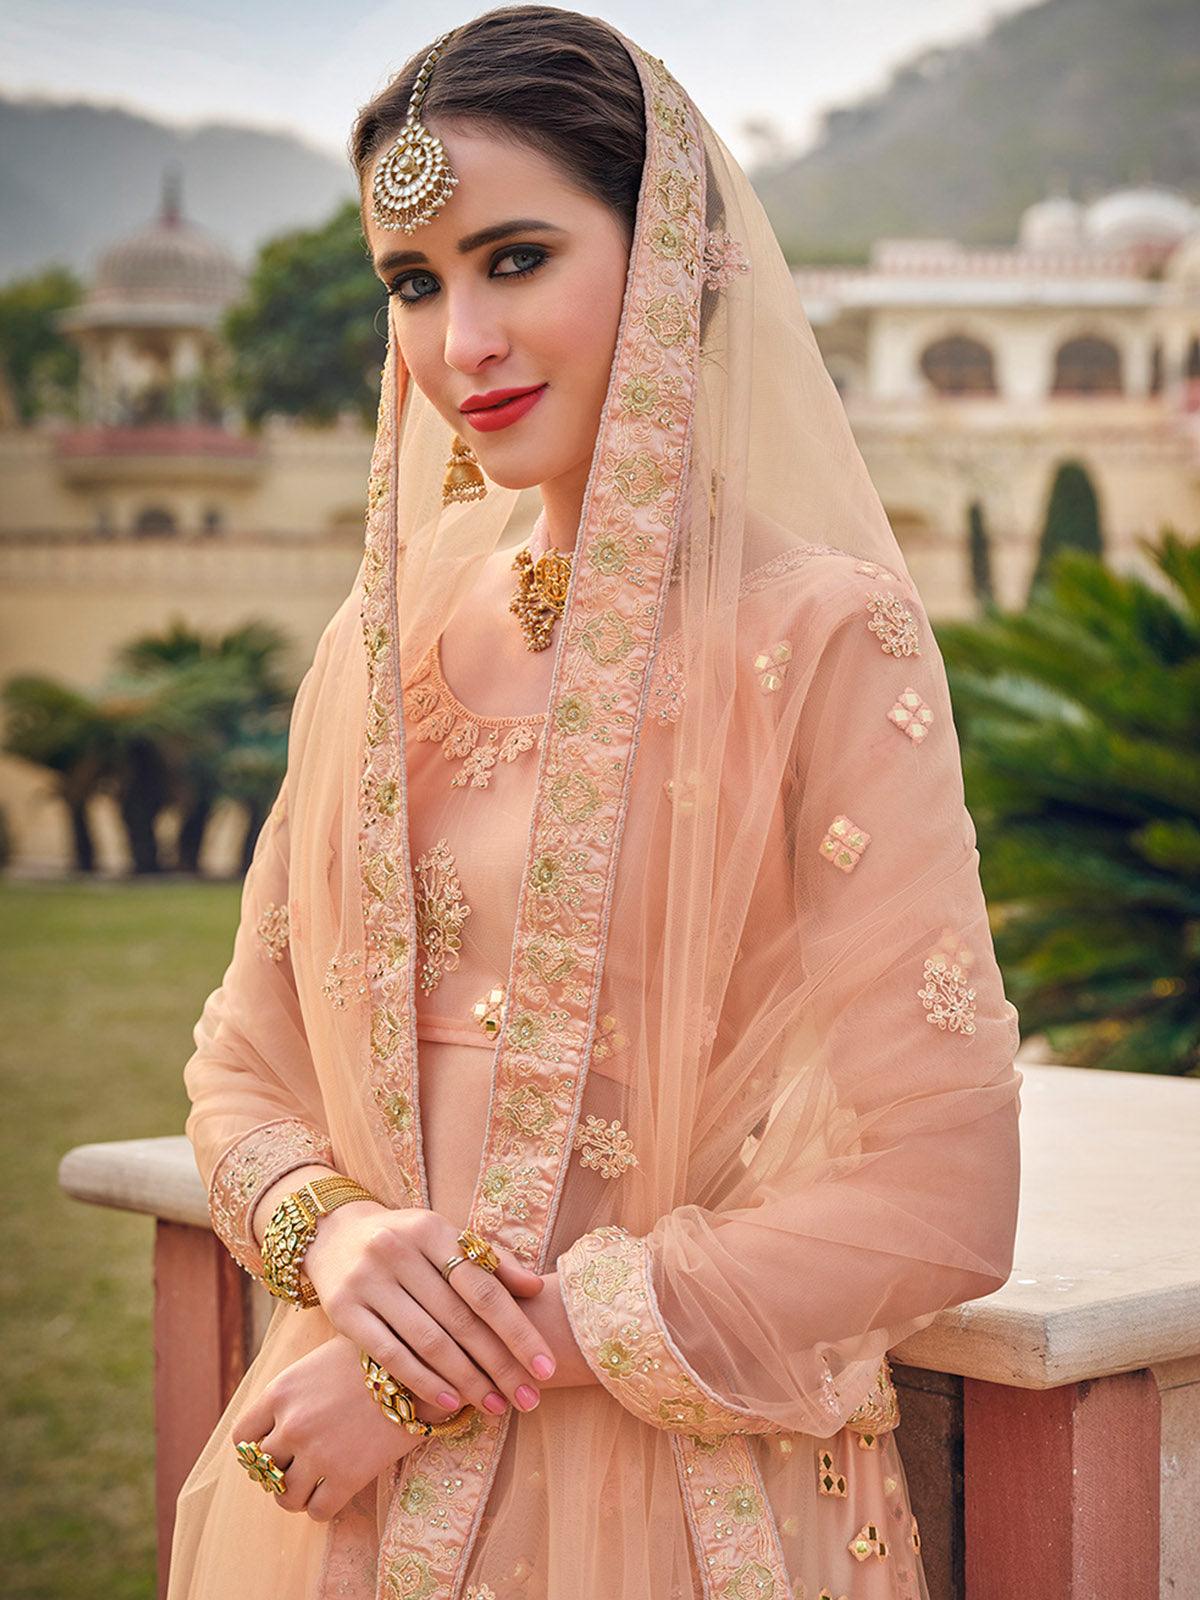 Peach Heavy Embroidered Zarkan Diamond Bridal Net Lehenga Choli Wedding  Party | eBay